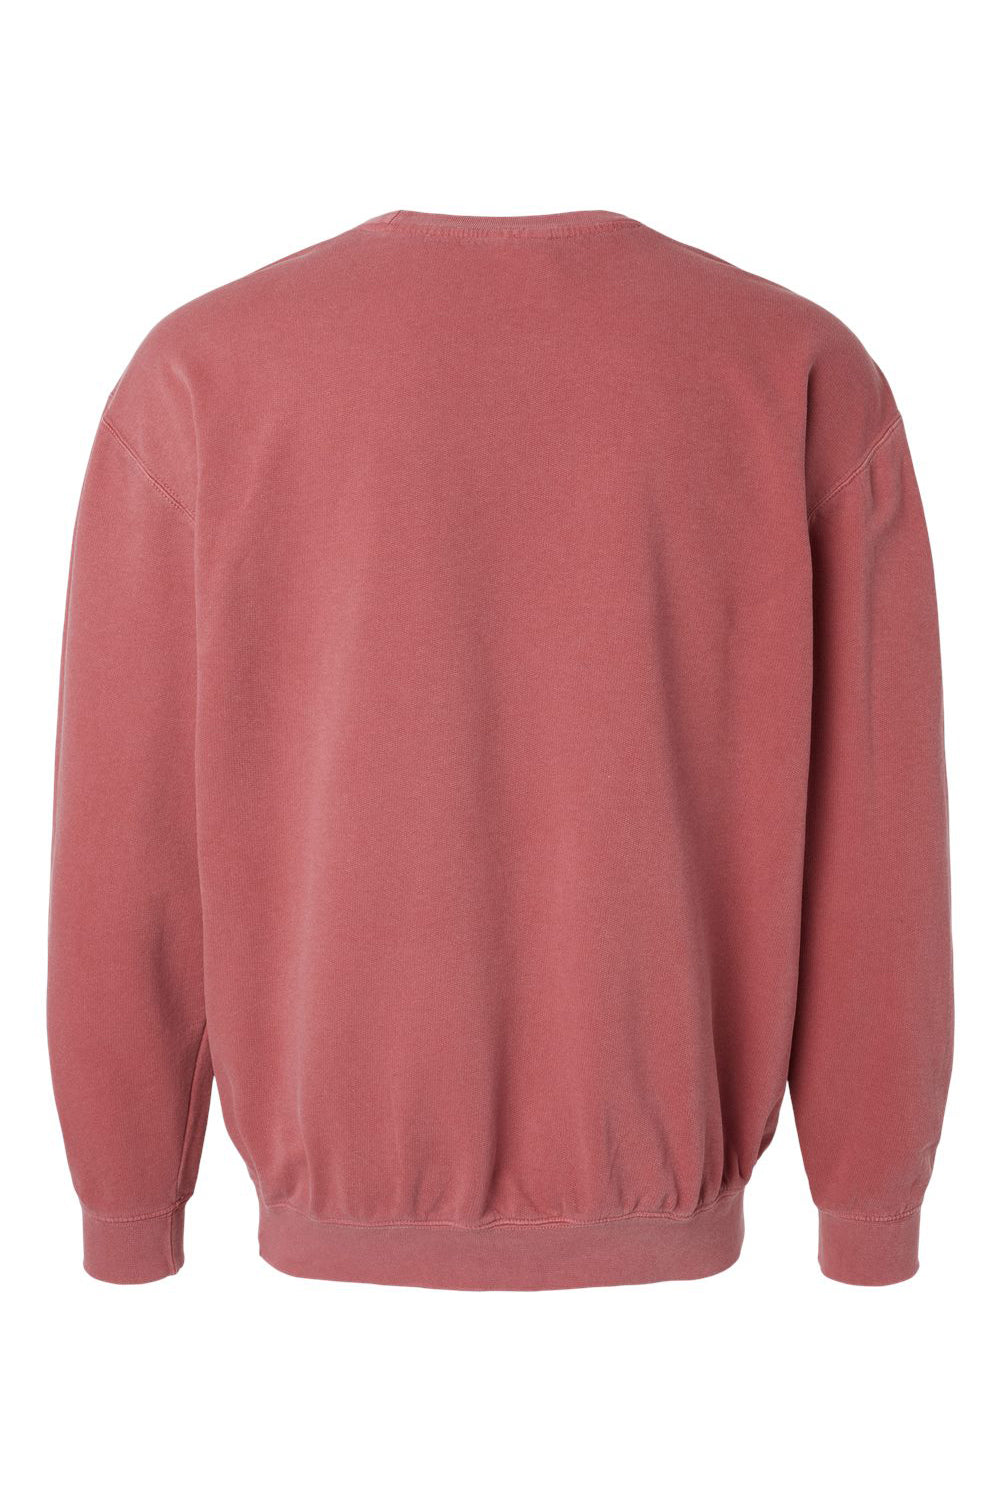 Comfort Colors 1466 Mens Garment Dyed Fleece Crewneck Sweatshirt Crimson Red Flat Back